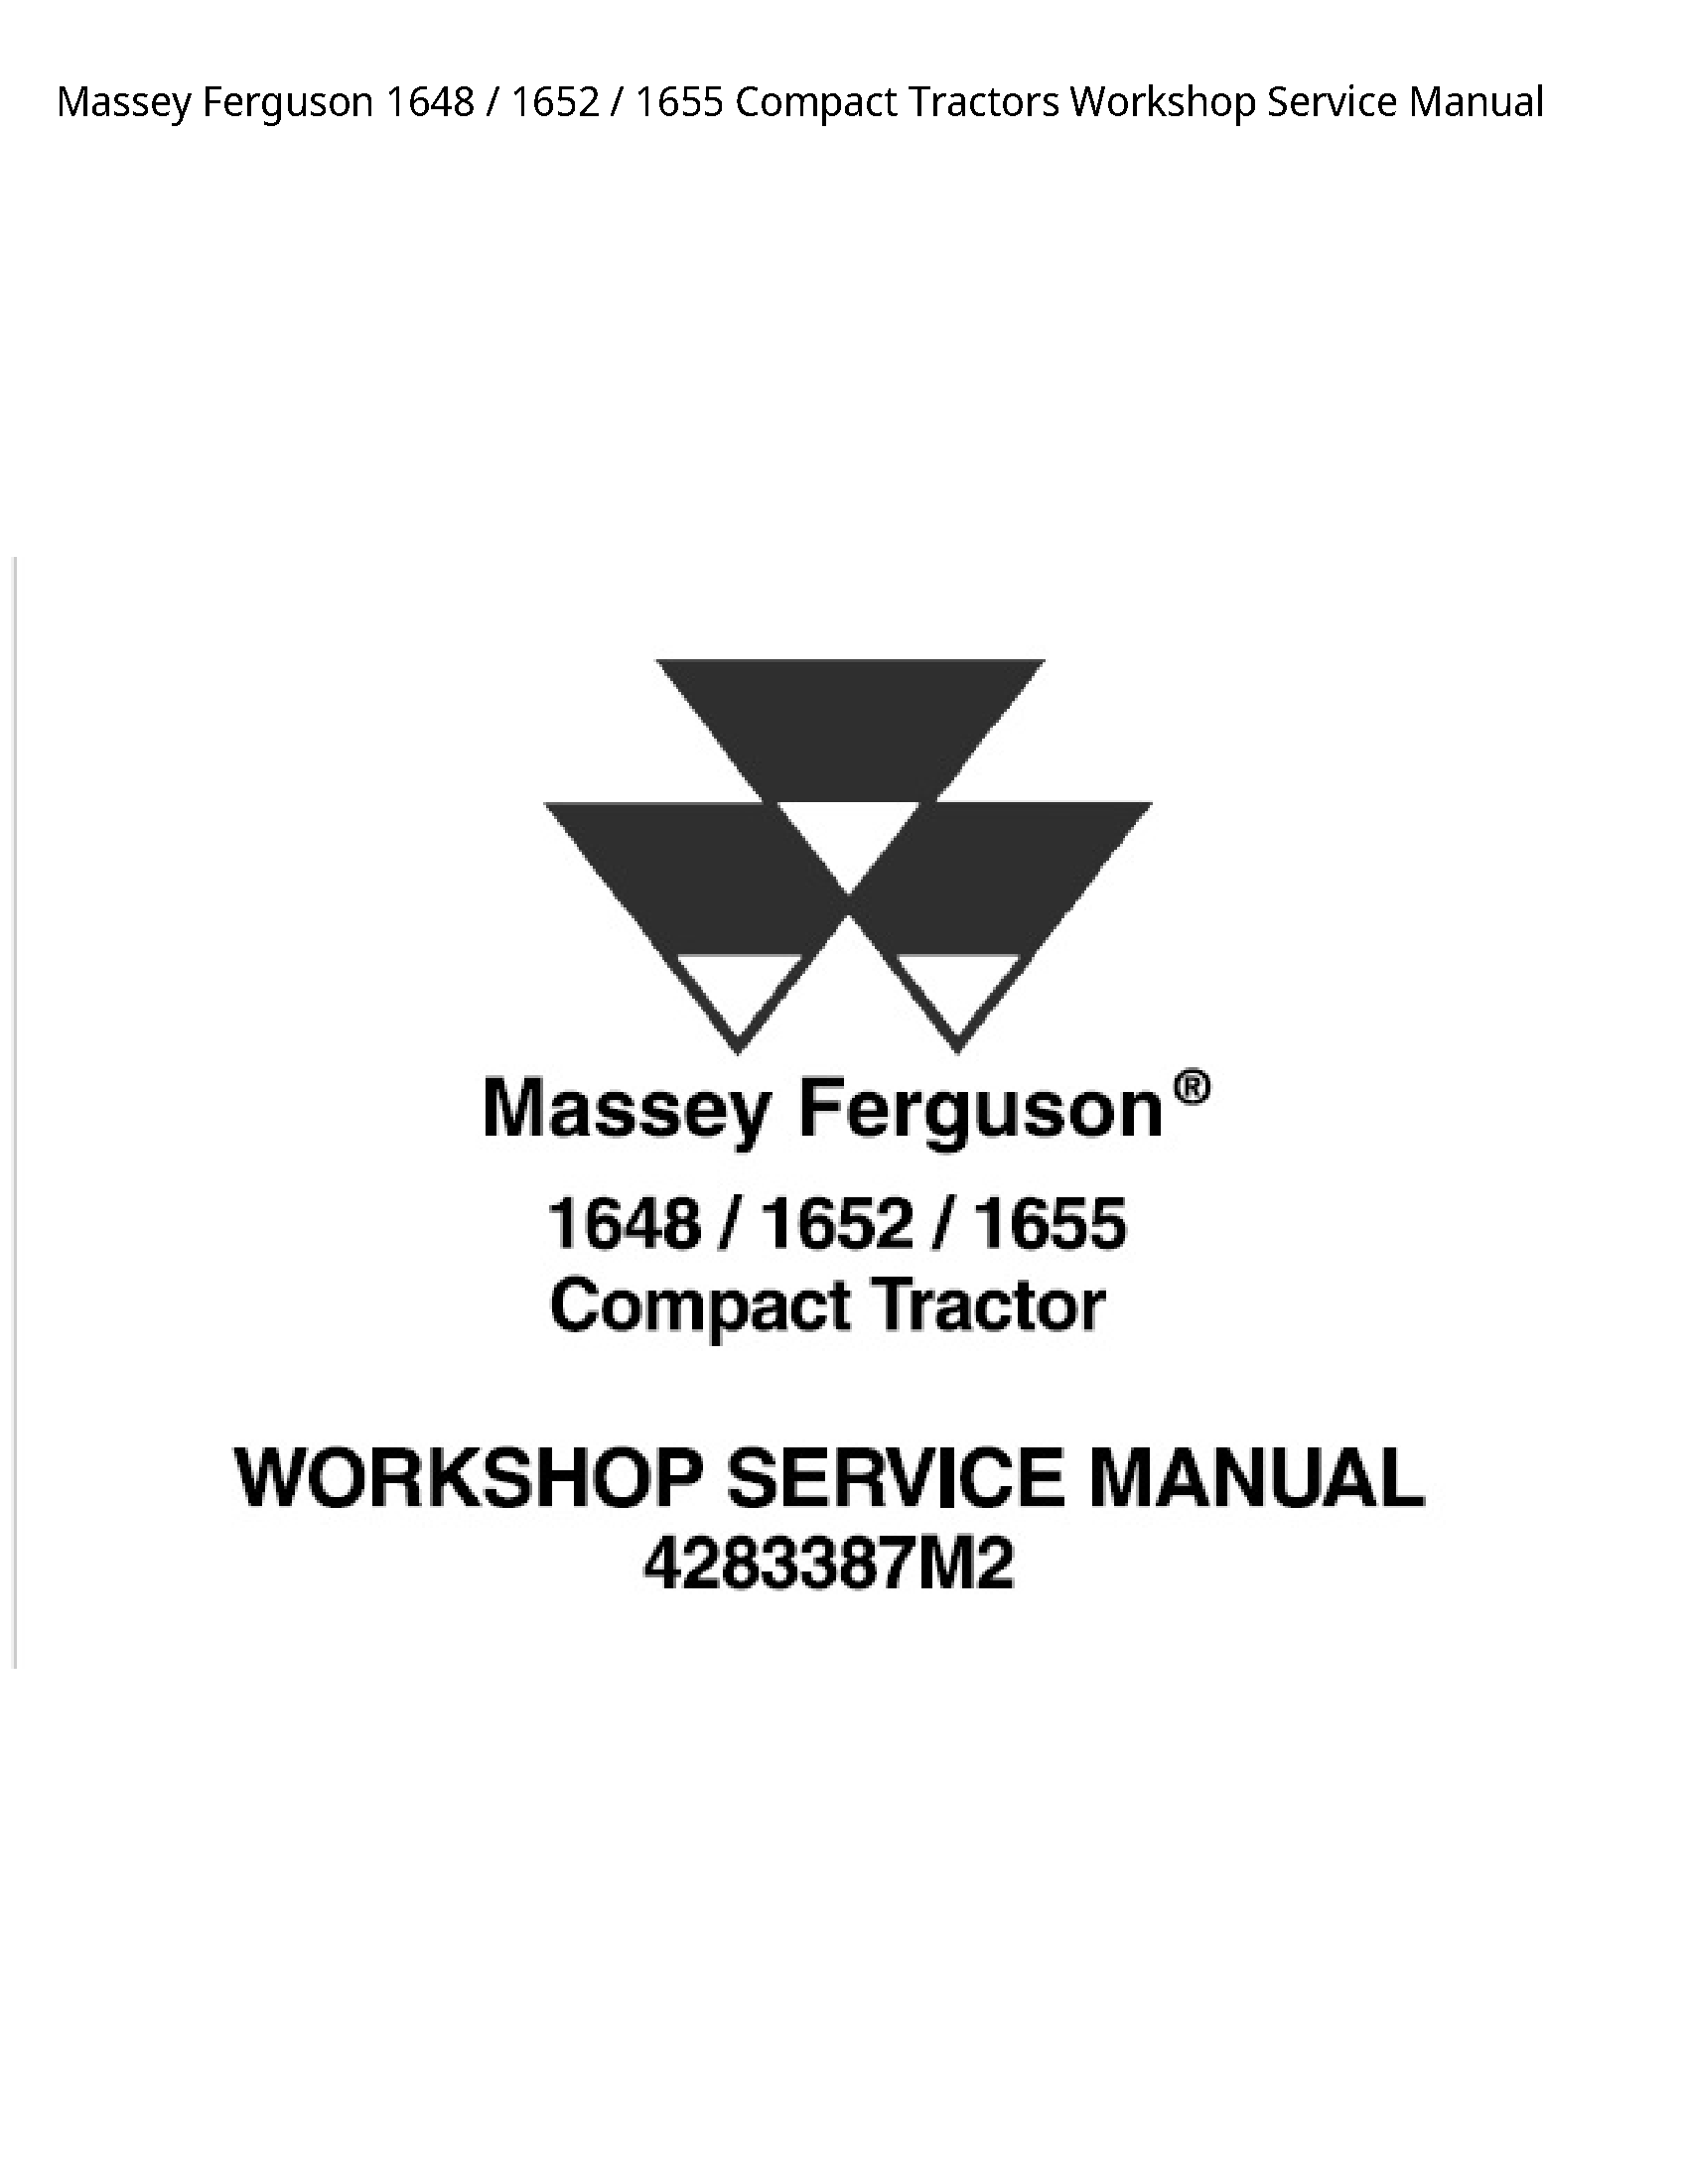 Massey Ferguson 1648 Compact Tractors Service manual